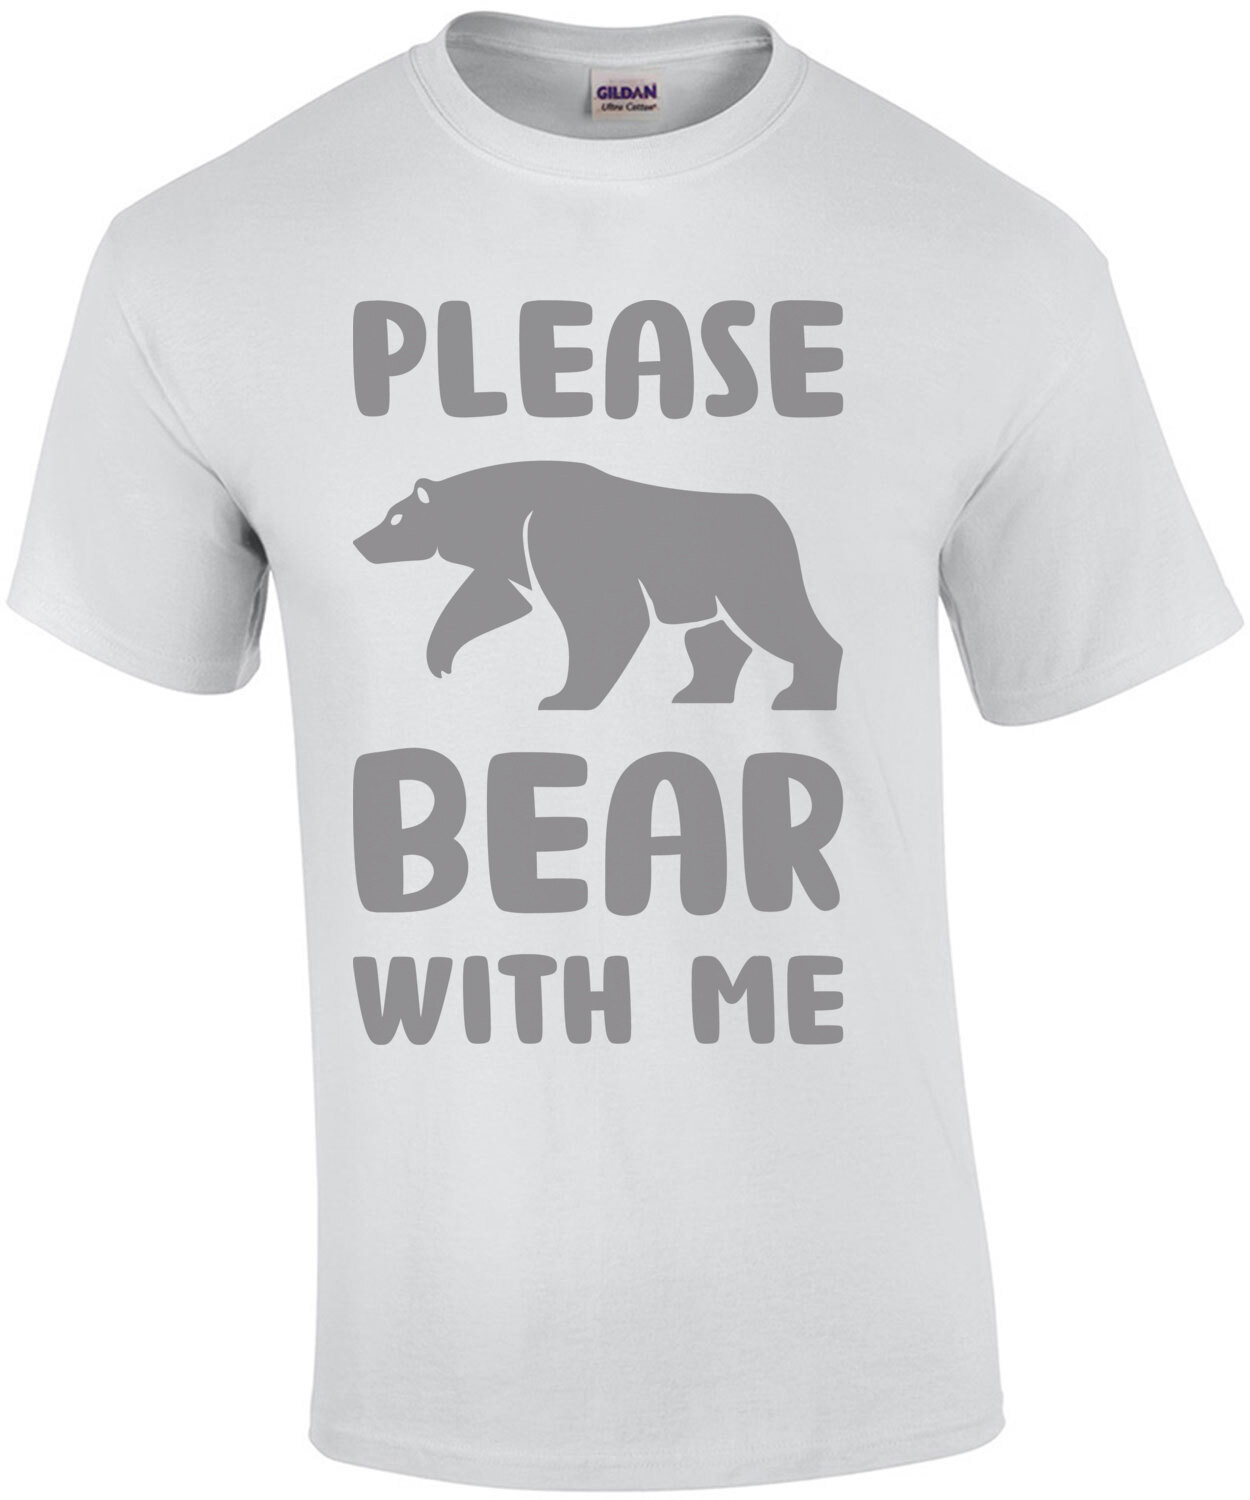 Please bear with me - pun t-shirt